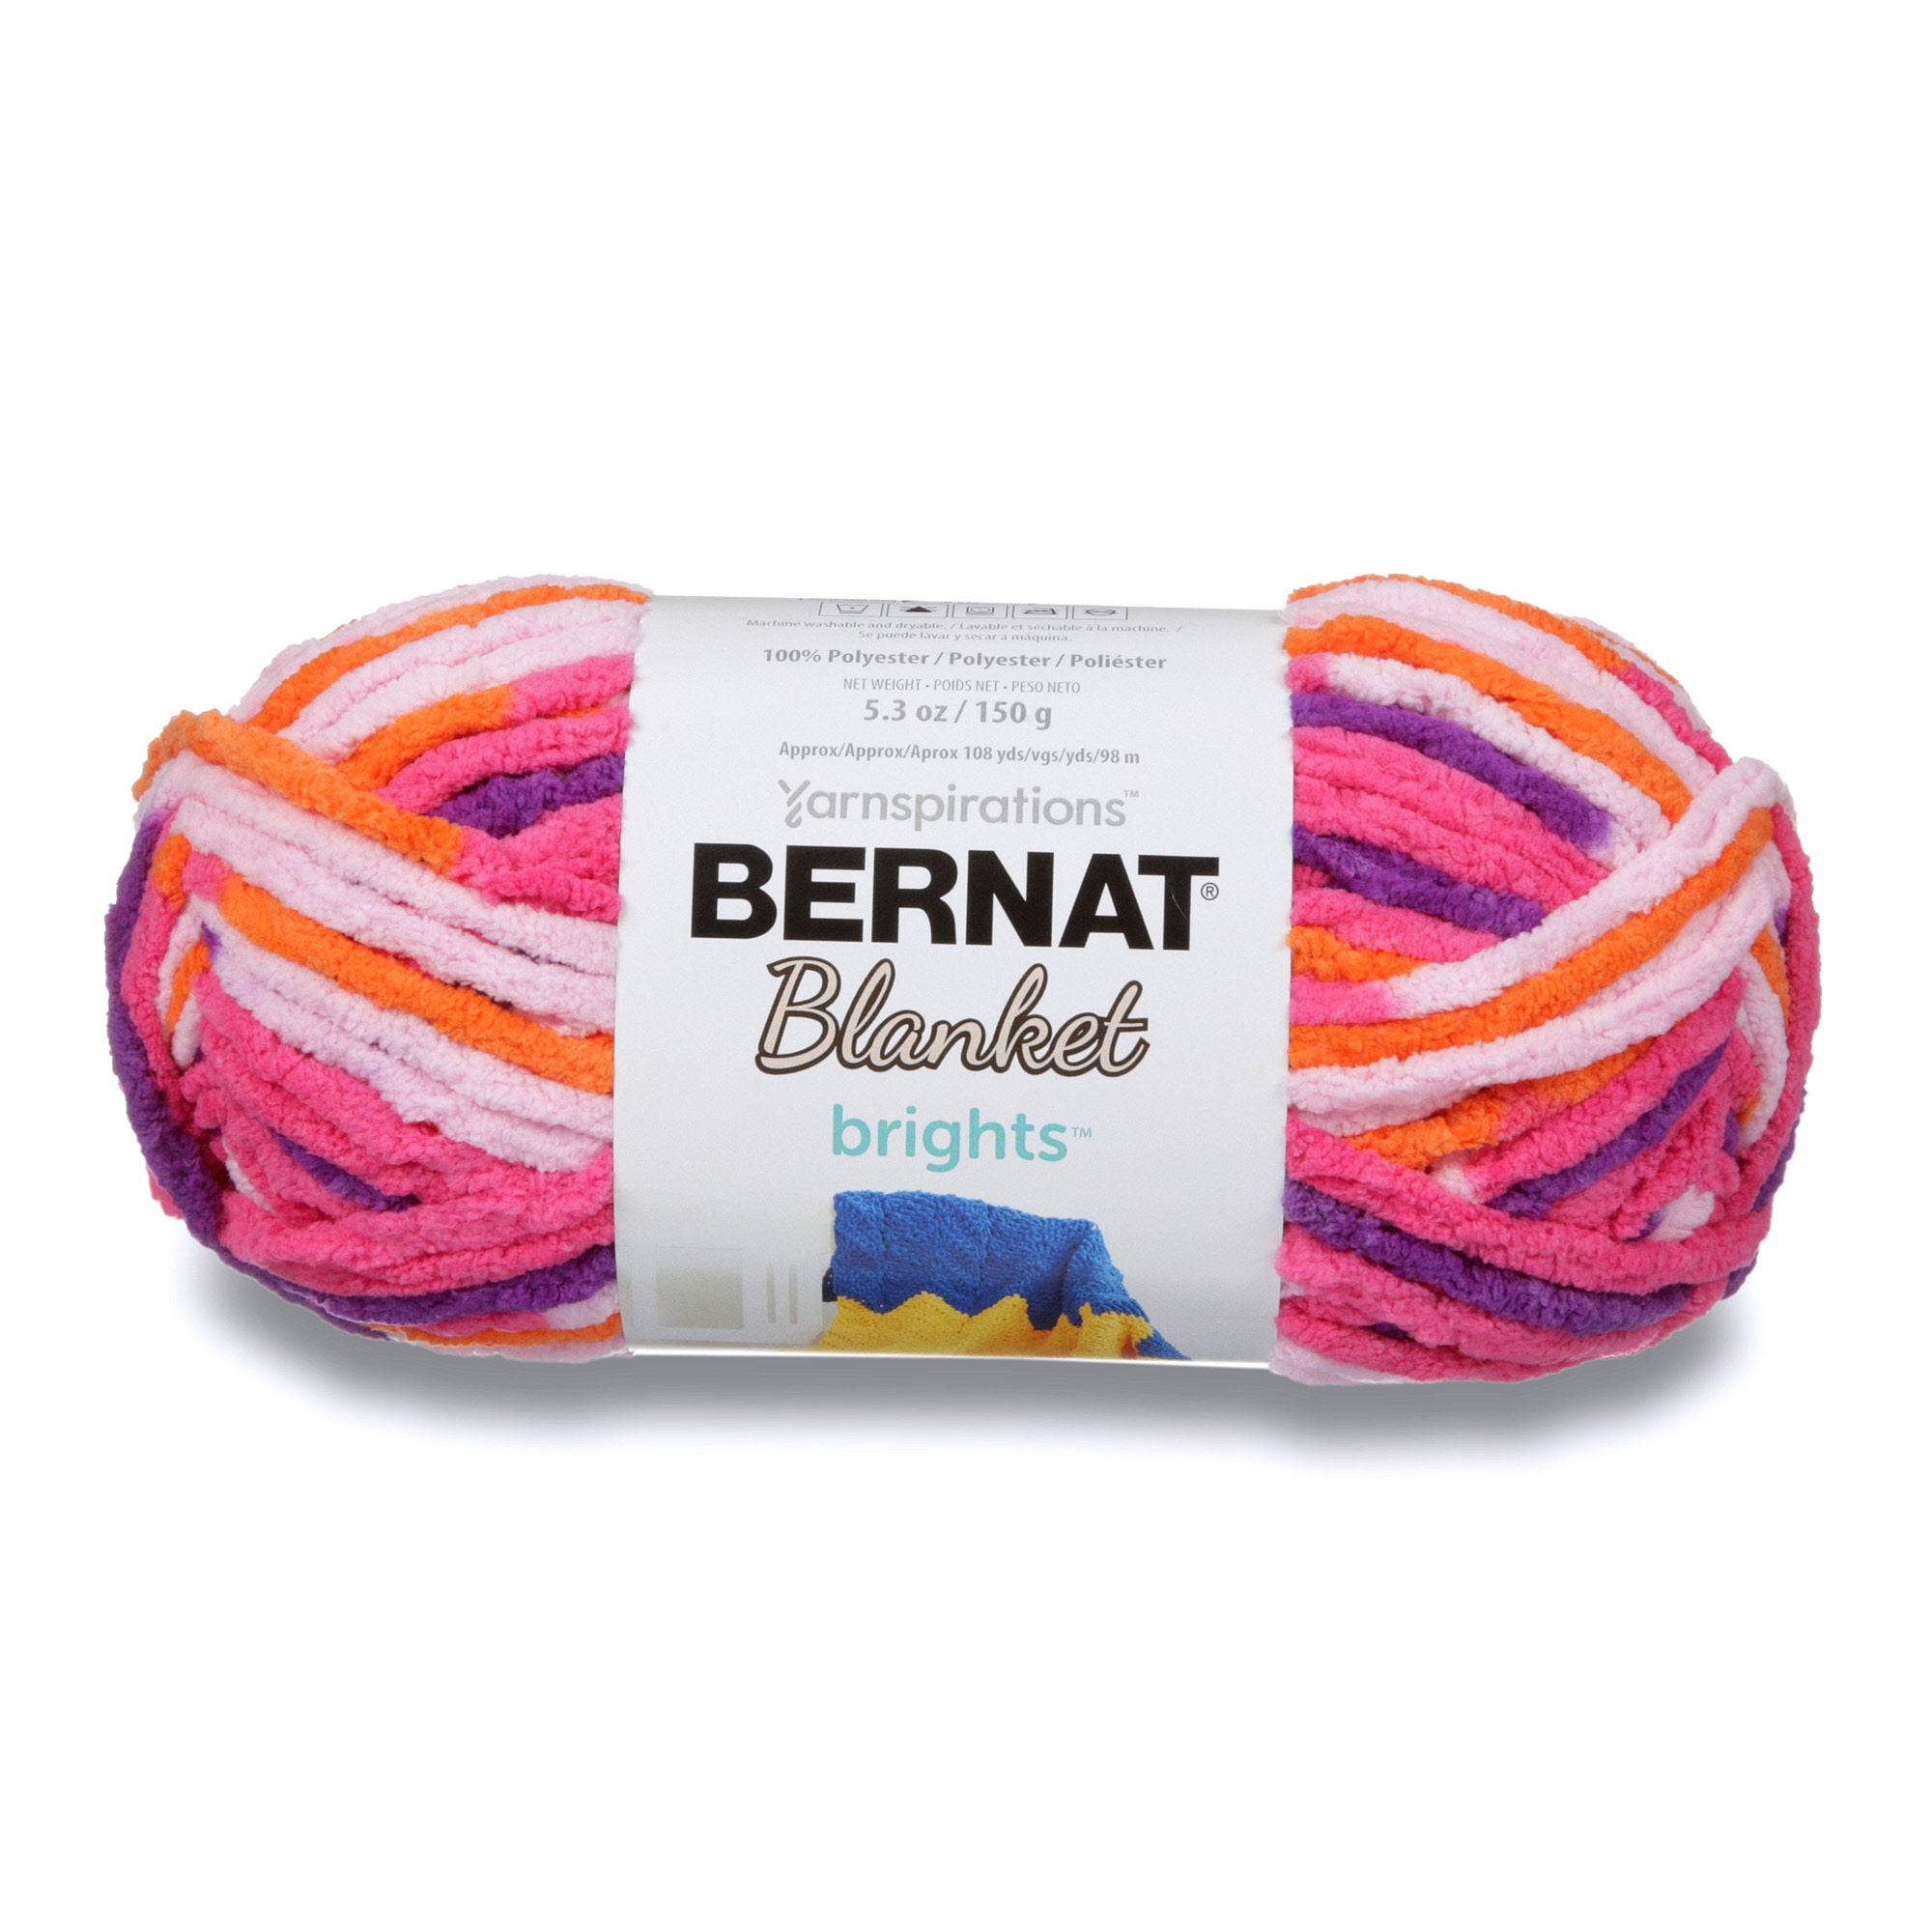 Bernat Blanket Brights Yarn - 2 Big Balls - Solid Colors - with Needle  Gauge (Pow Purple)